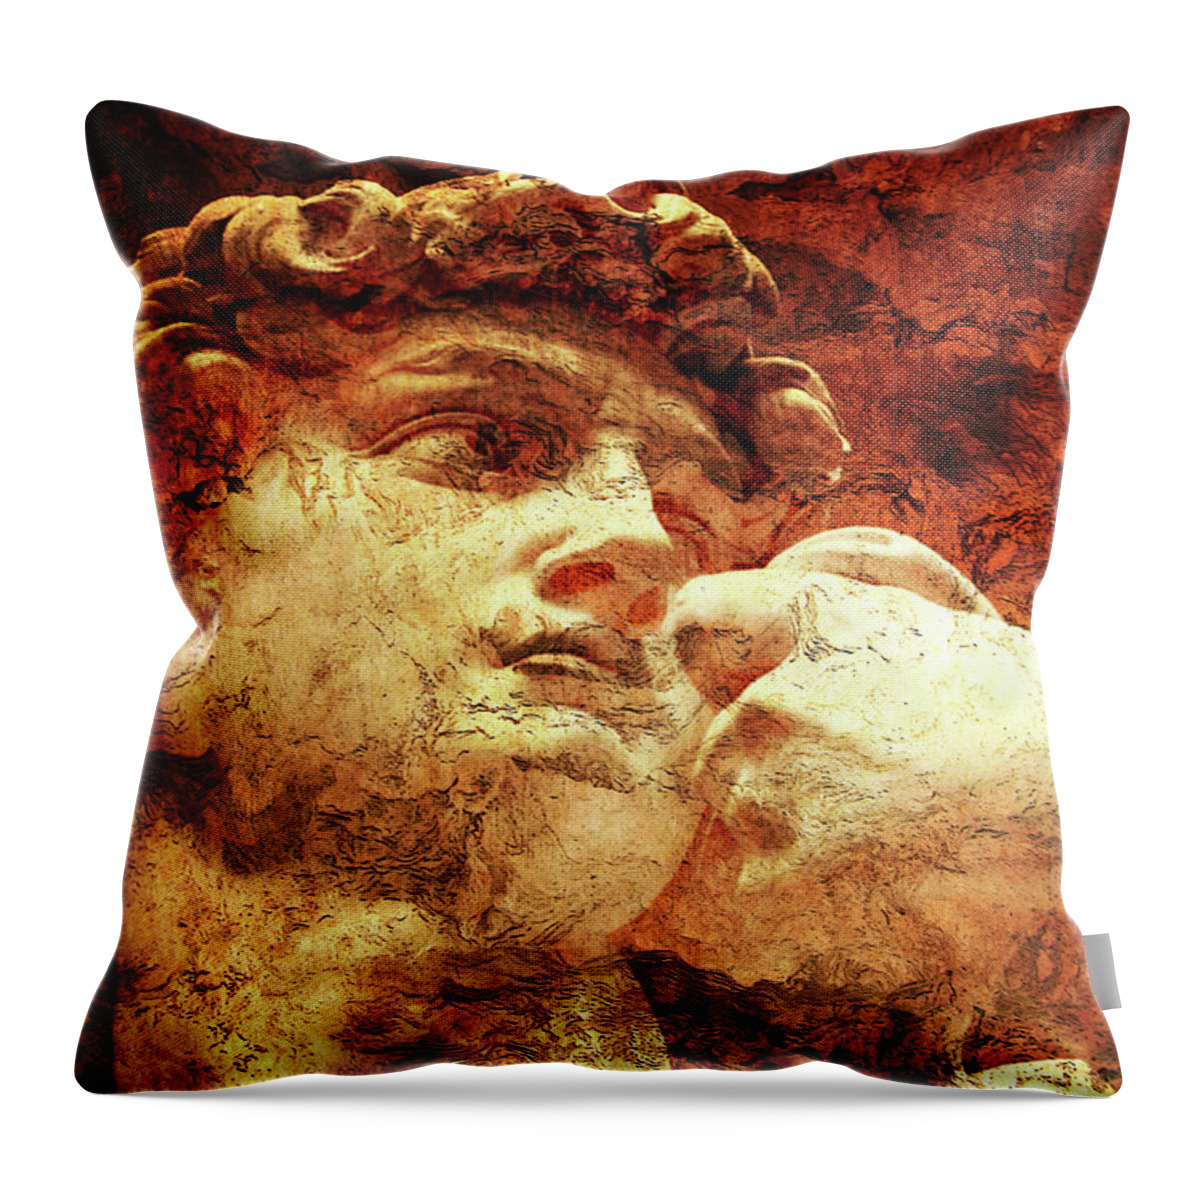 The David Art Throw Pillow featuring the photograph DAVID by Michelangelo by J U A N - O A X A C A